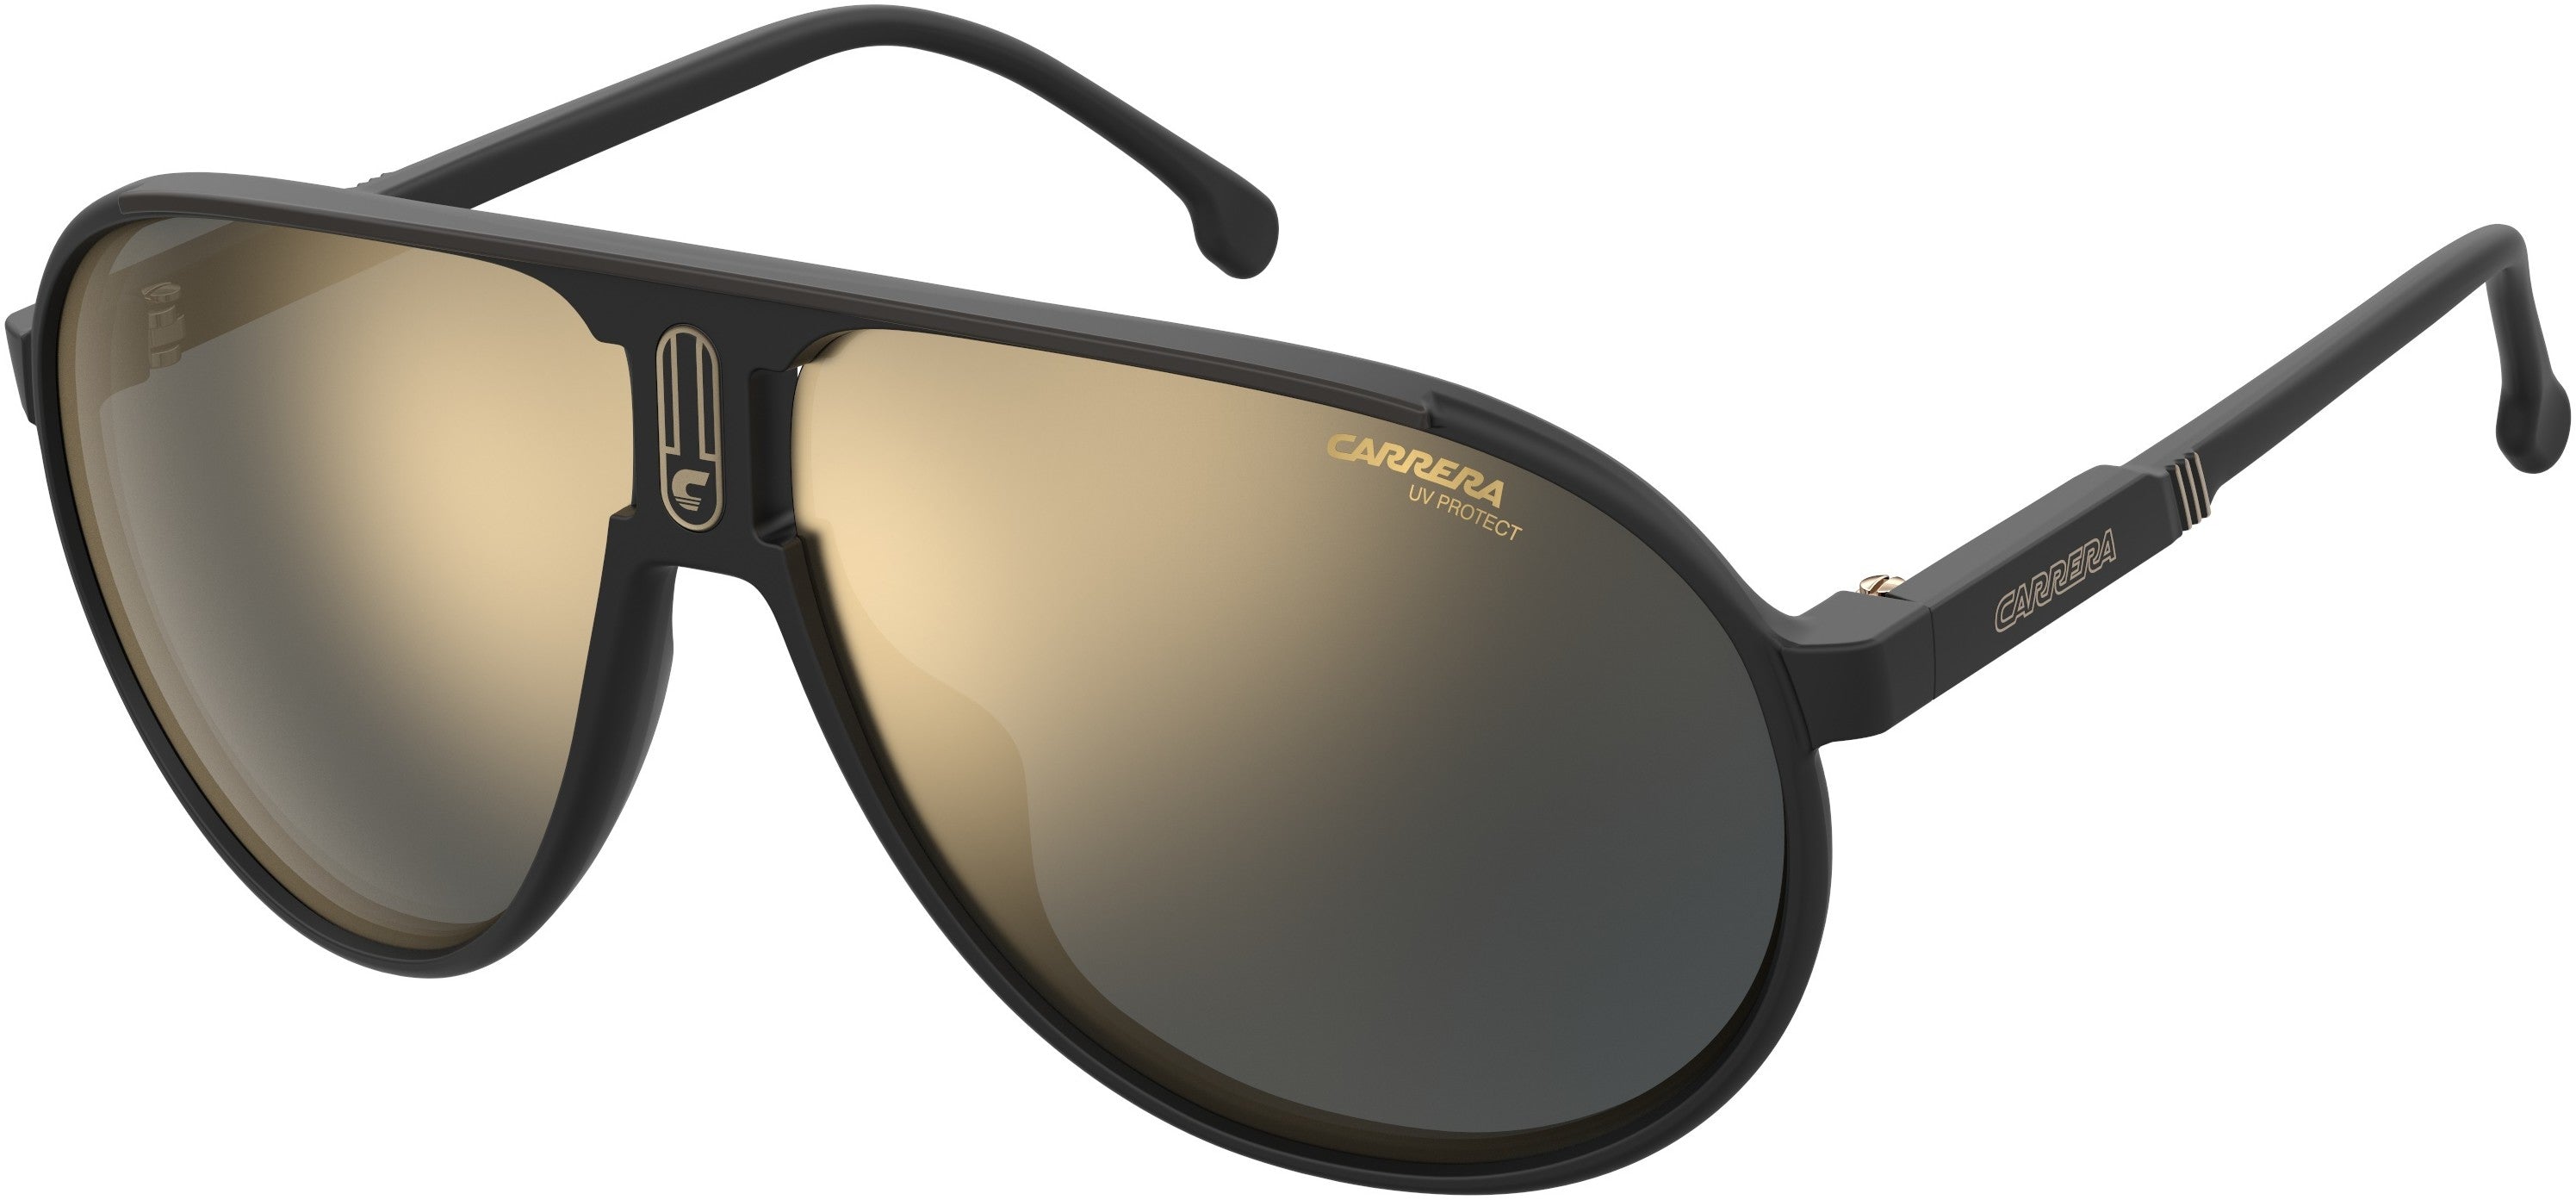 Carrera Champion 65 Aviator Sunglasses For Unisex